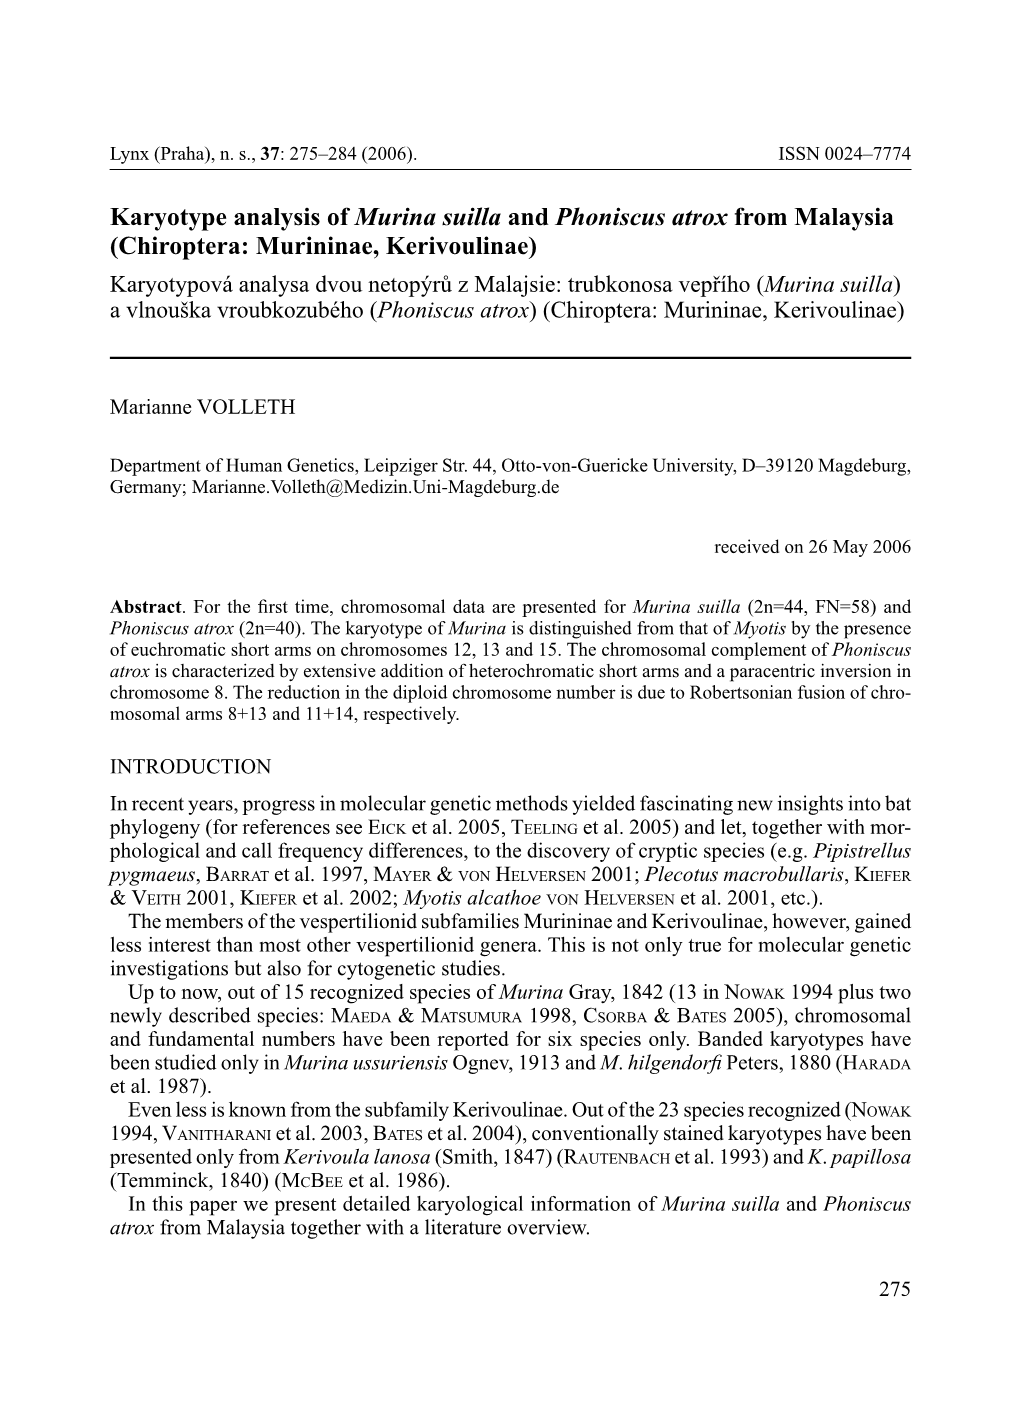 Karyotype Analysis of Murina Suilla and Phoniscus Atrox from Malaysia